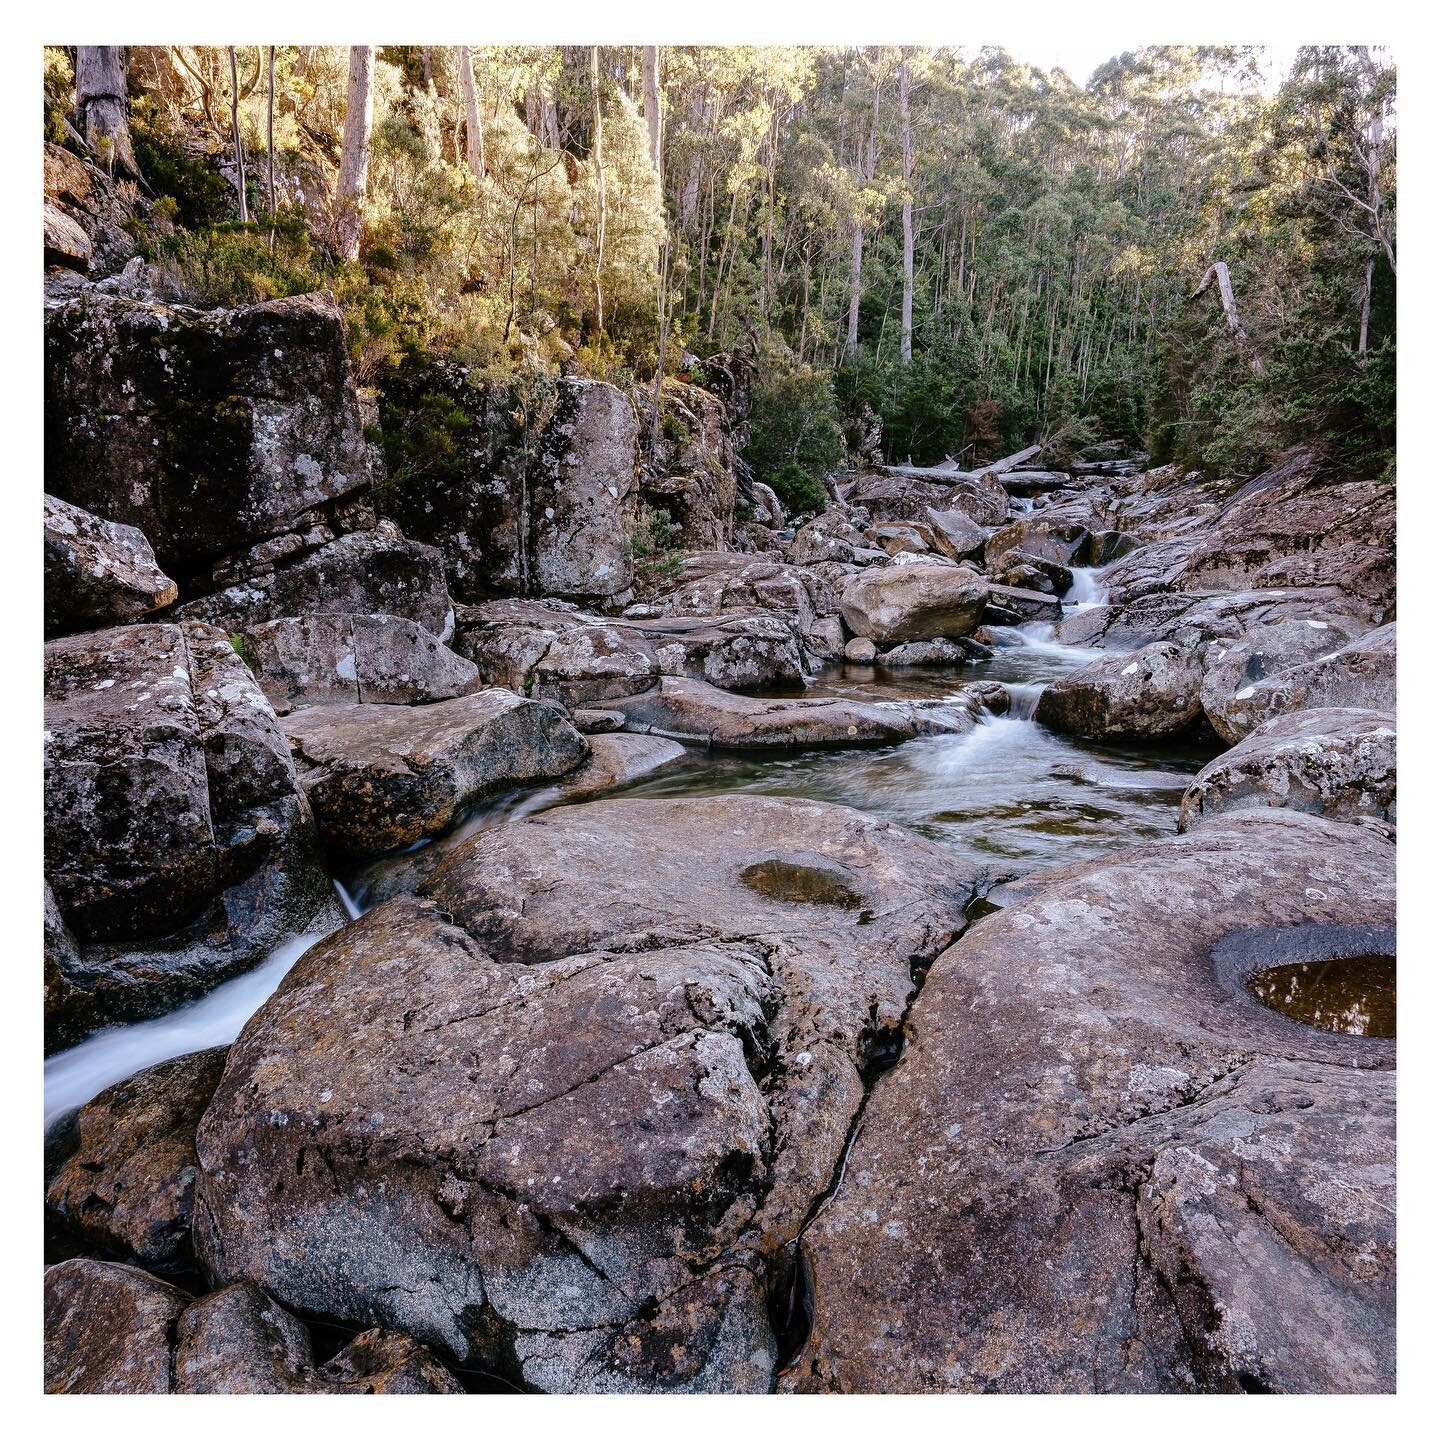 North West Bay River, kunanyi/Mount Wellington 

#keeptassiewild #kunanyi #tasmania